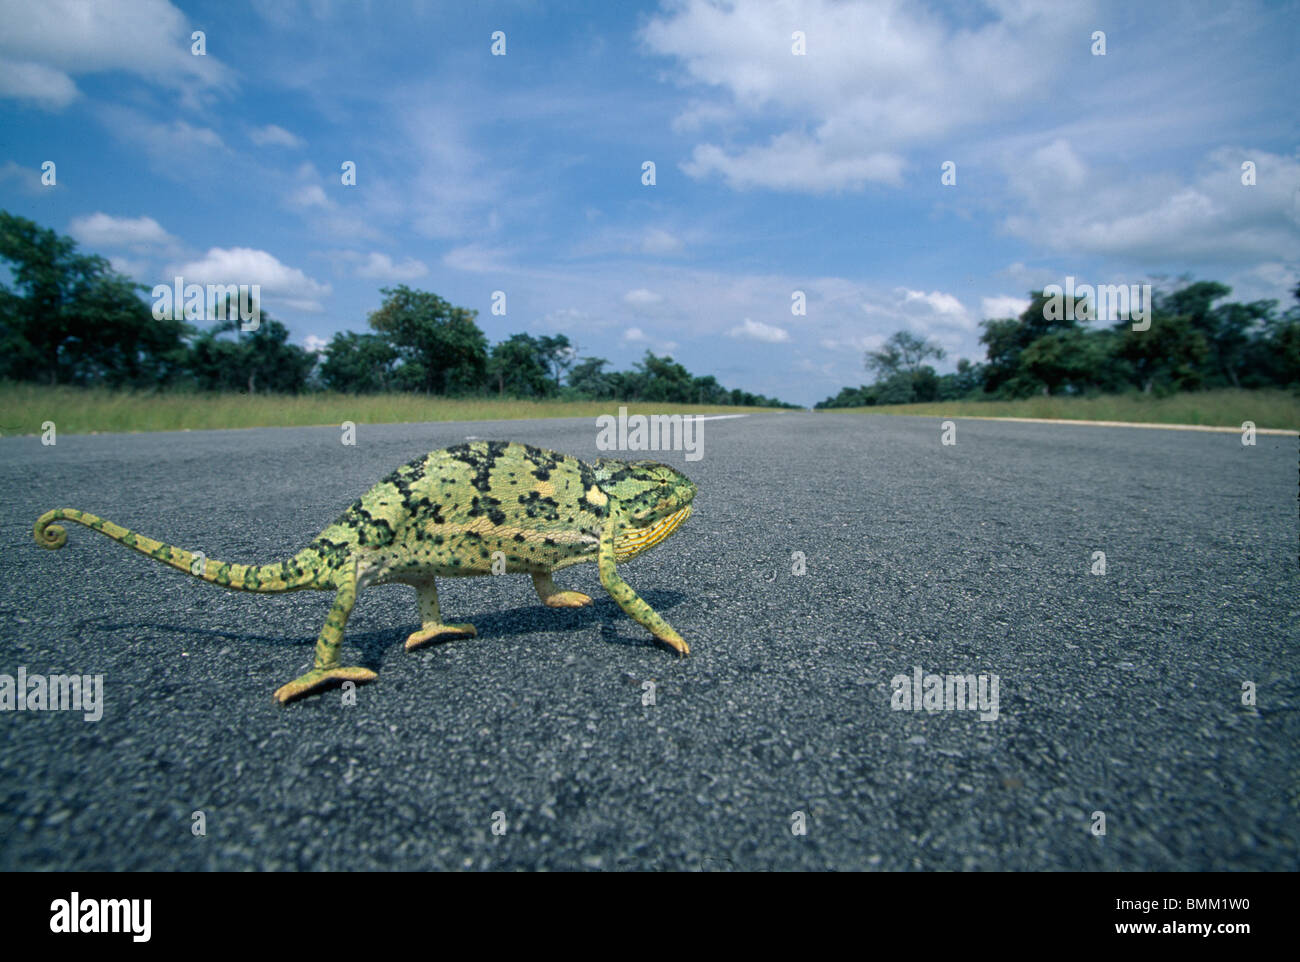 Namibia, Caprivi Strip, Flap-necked Chameleon (Chamaeleo dilepis) runs across road near Angola border Stock Photo